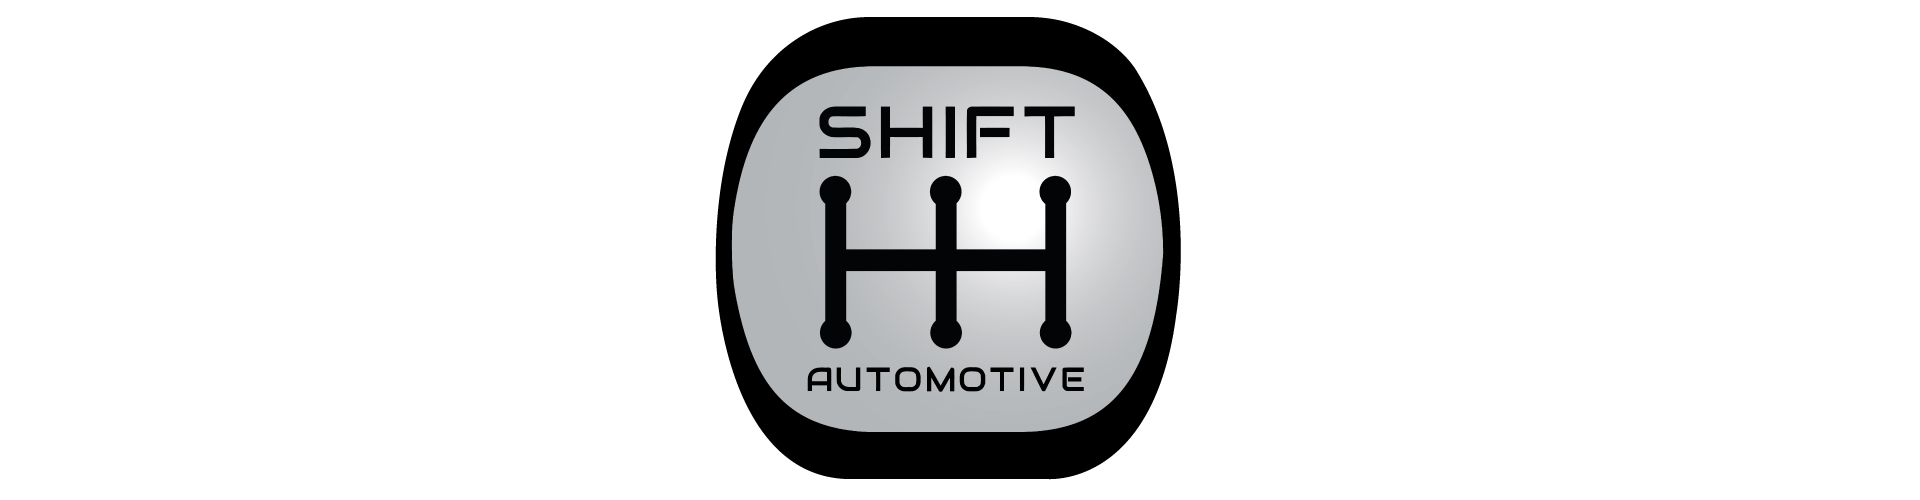 Shift Automotive